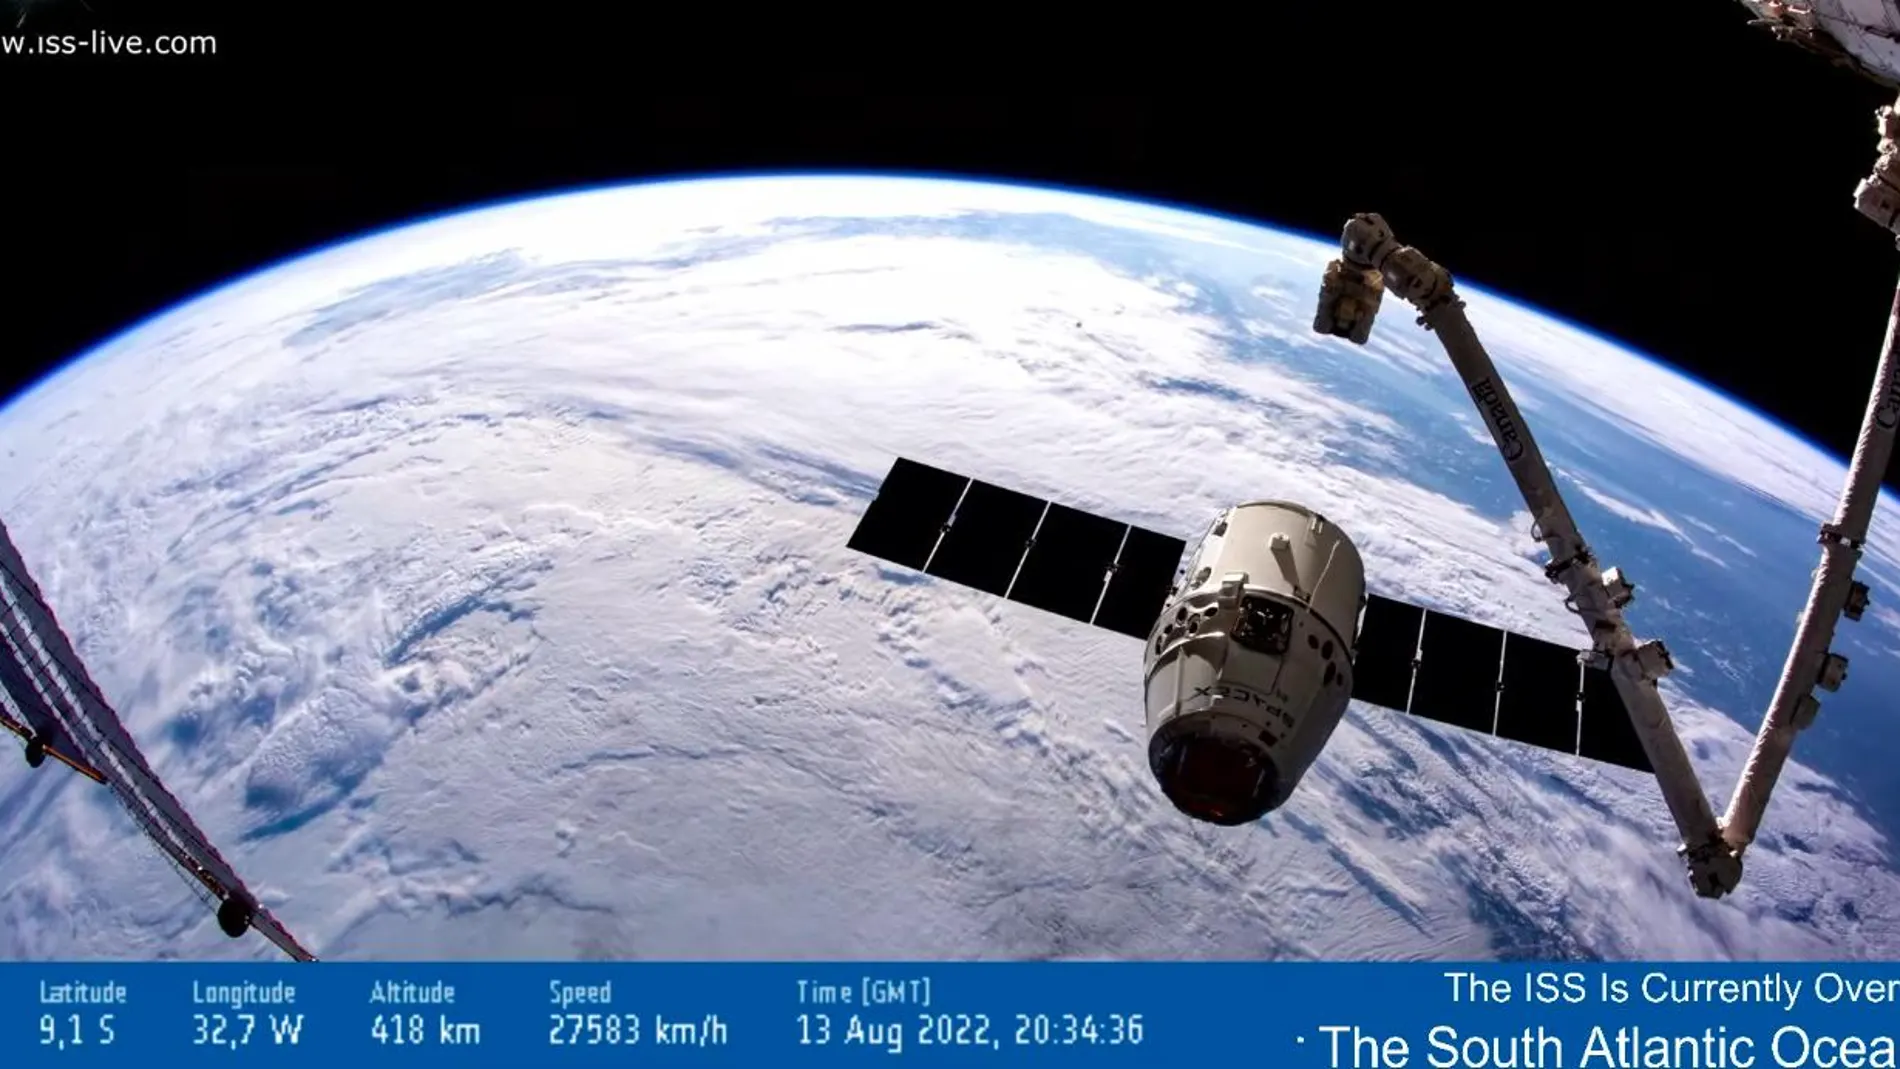 Para viajar a 27.000 km/h a bordo de la ISS solo basta "subirse" a esta web.